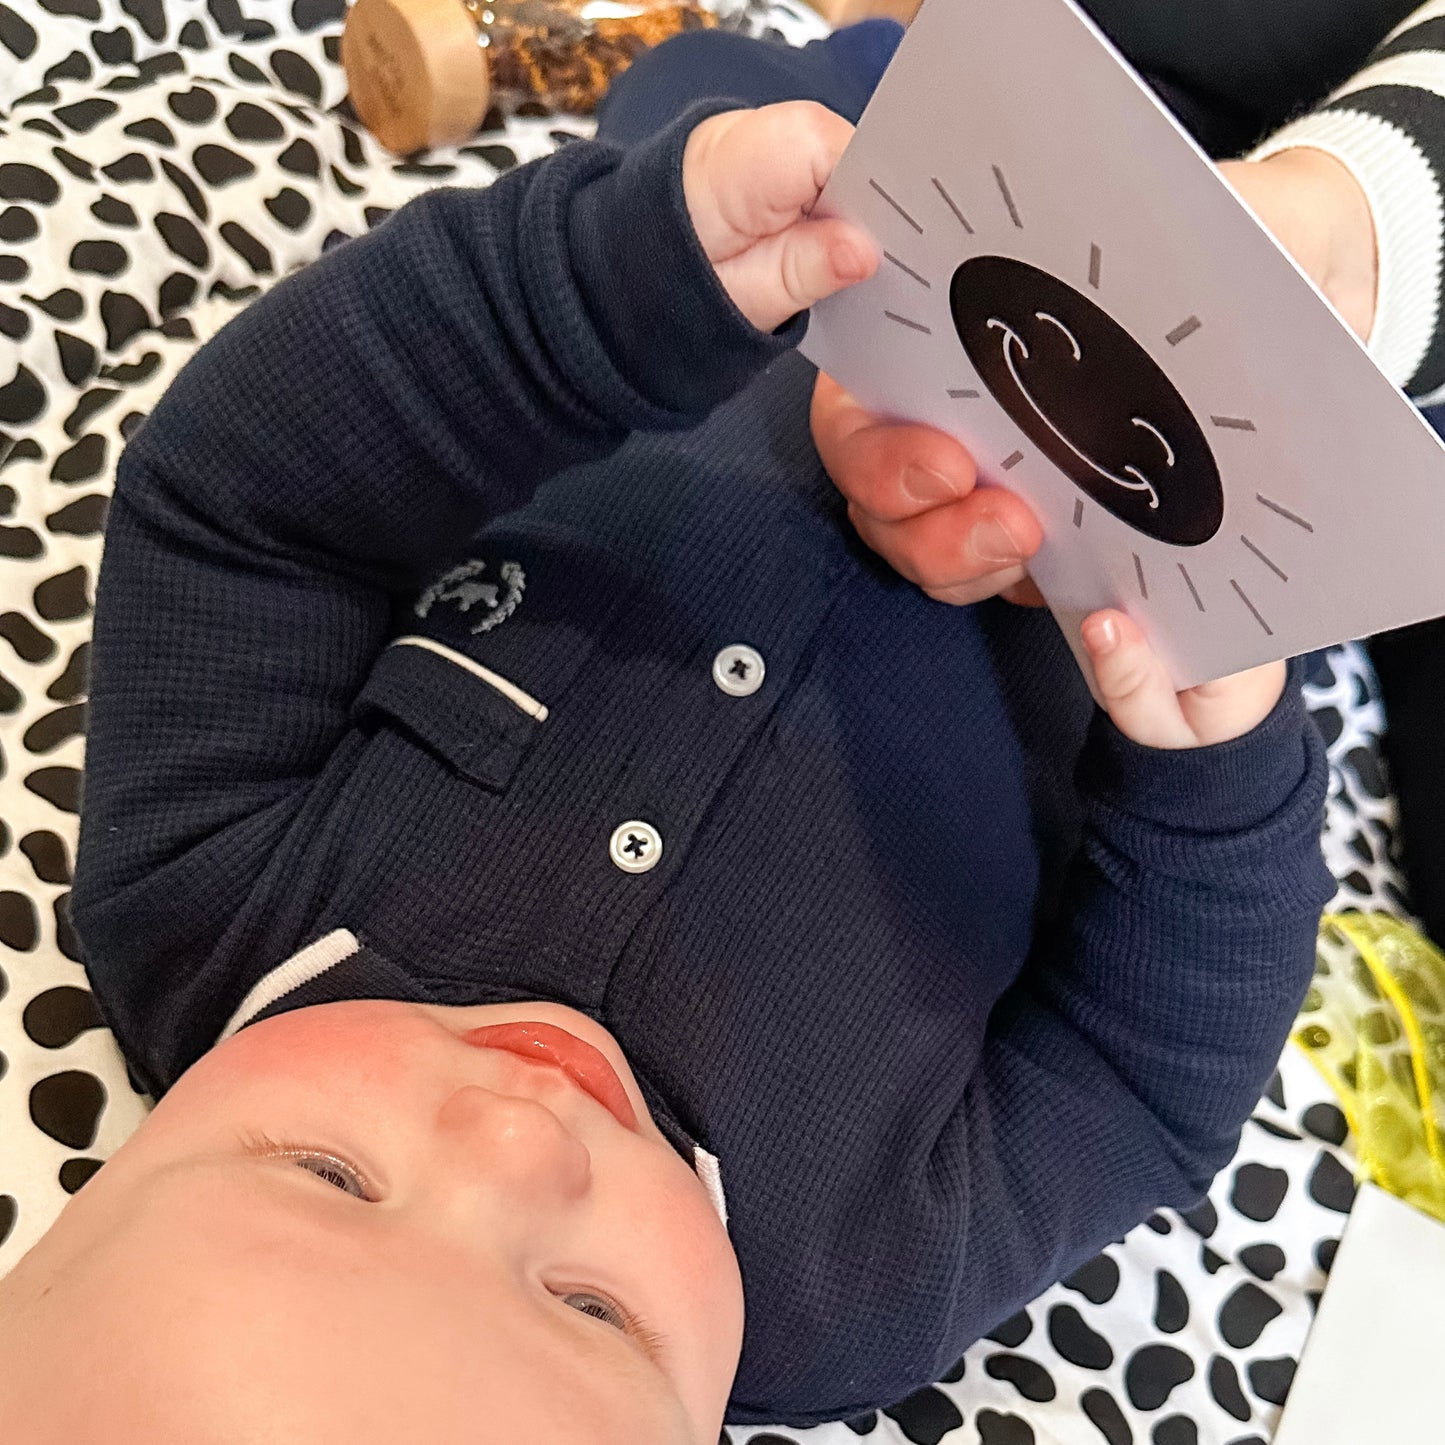 Newborn Sensory Flashcards